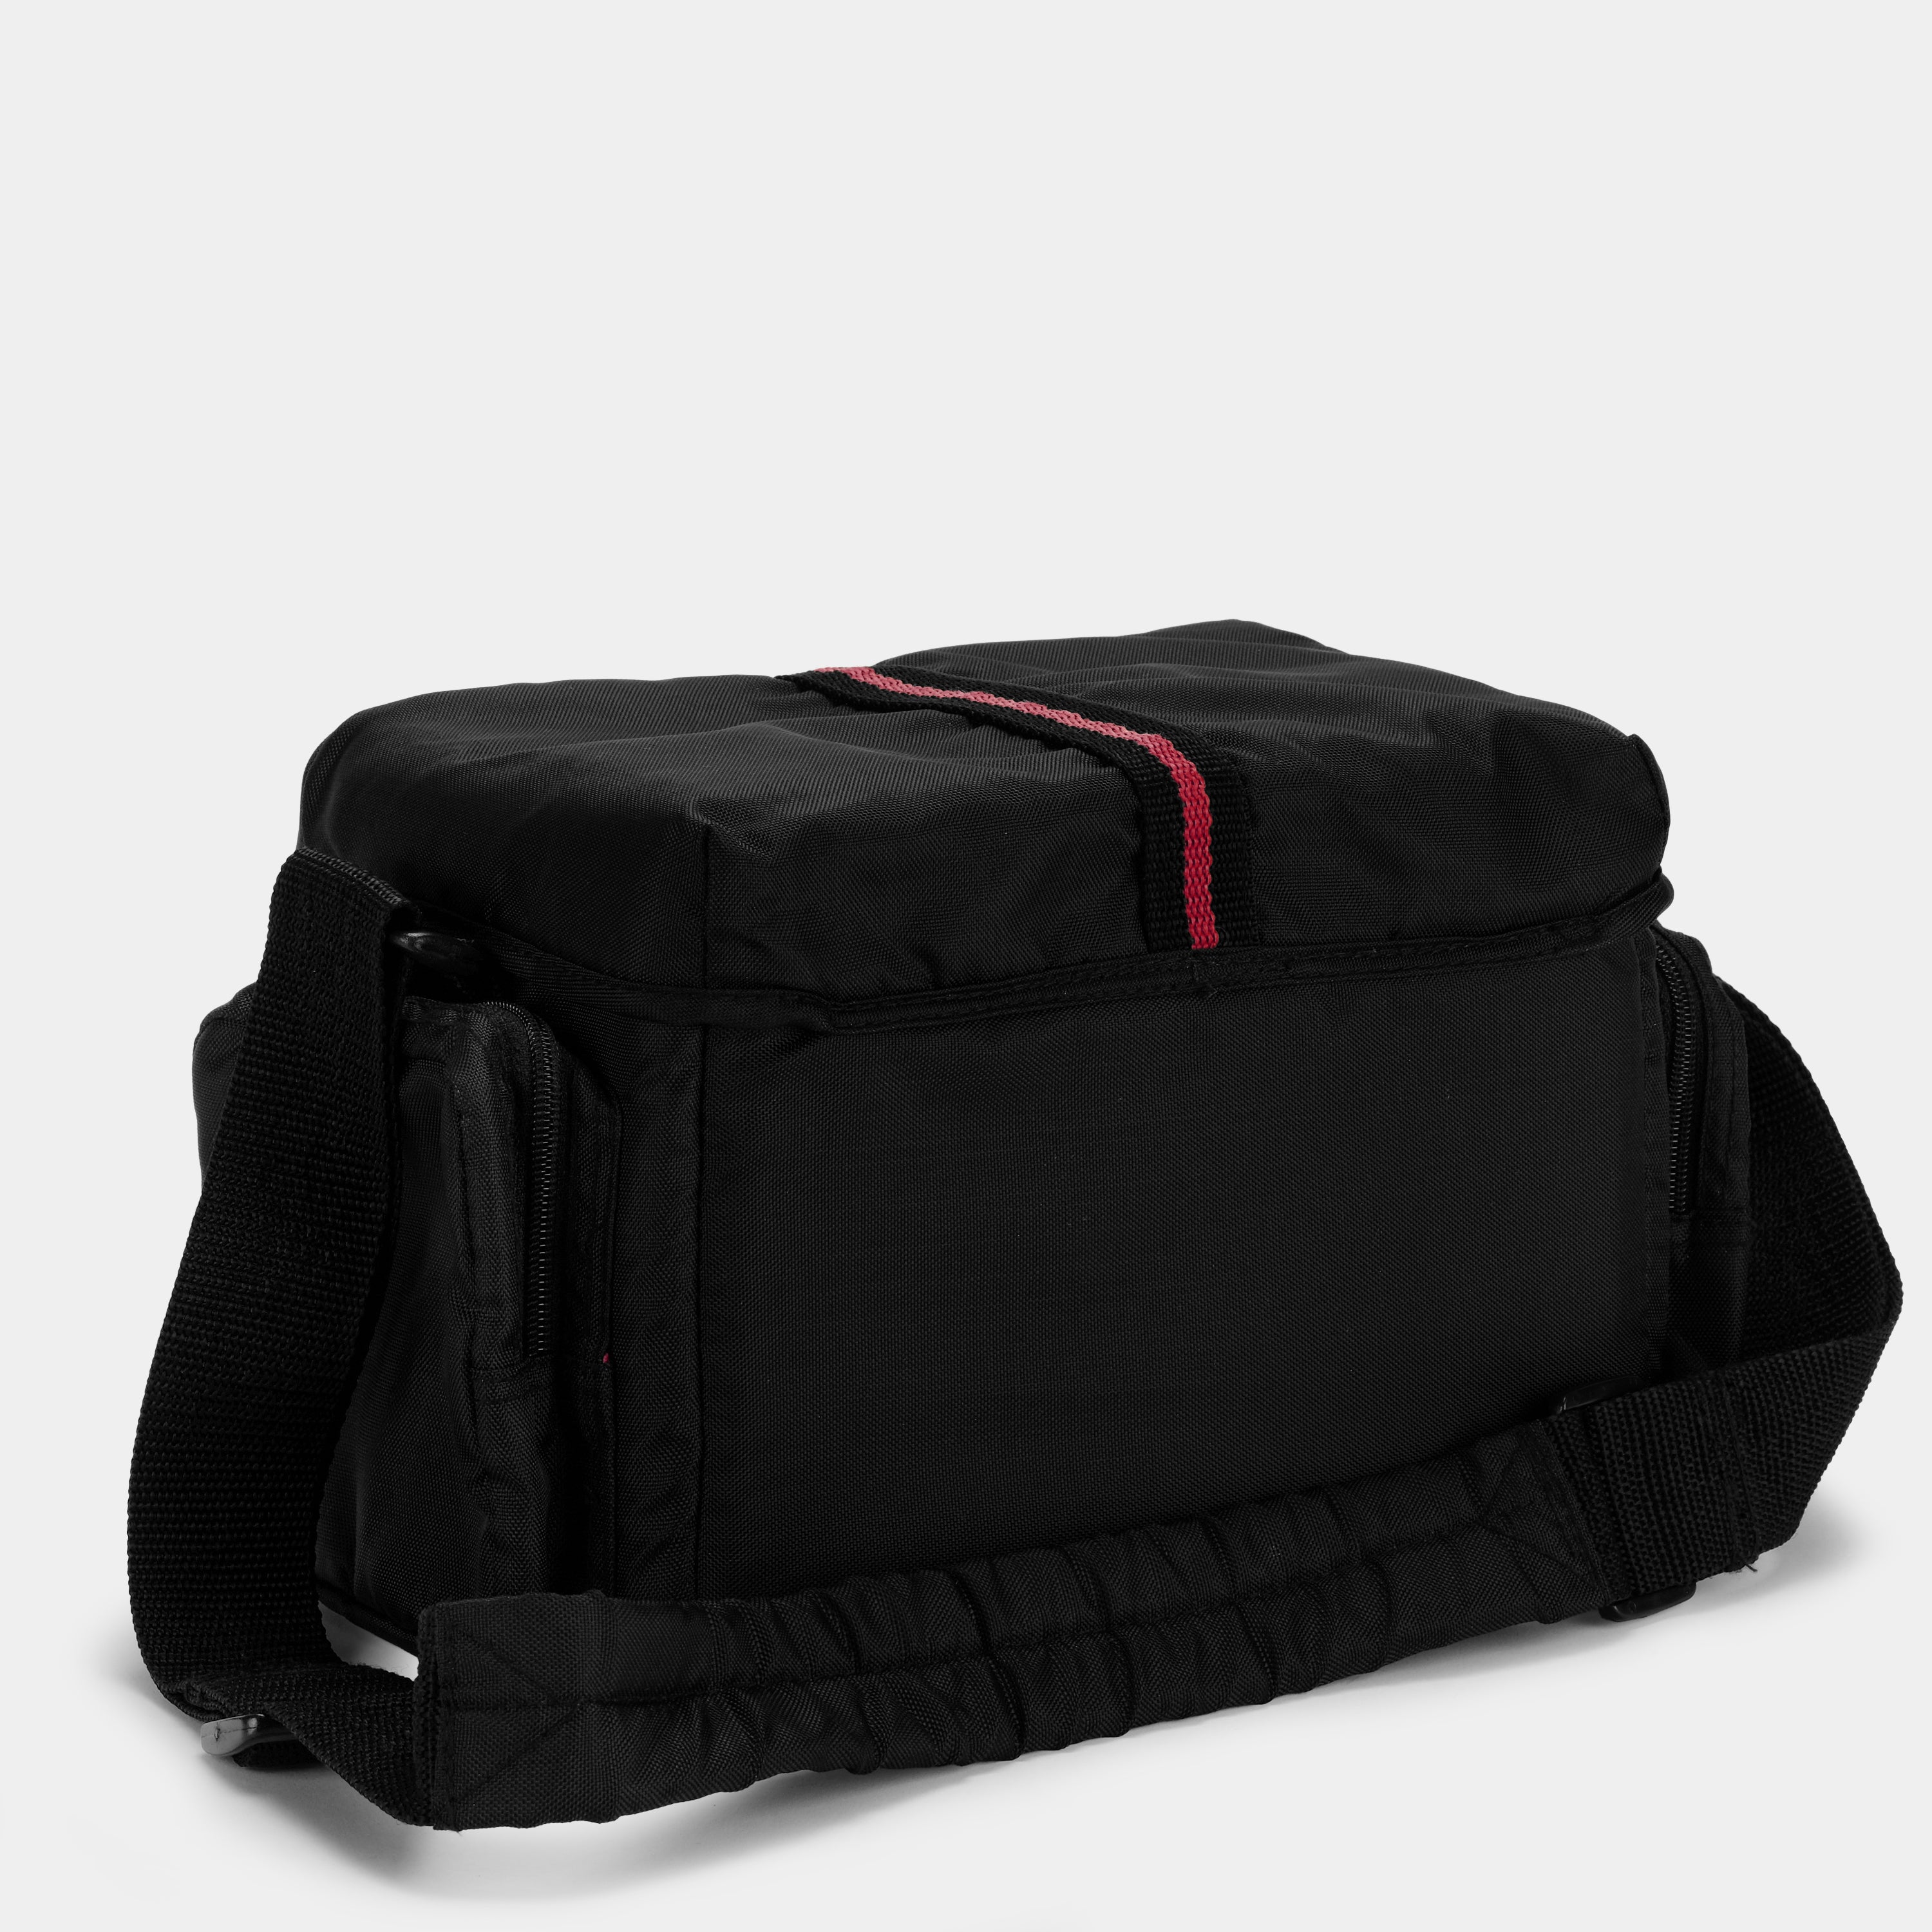 Black with Red Stripe Camera Bag